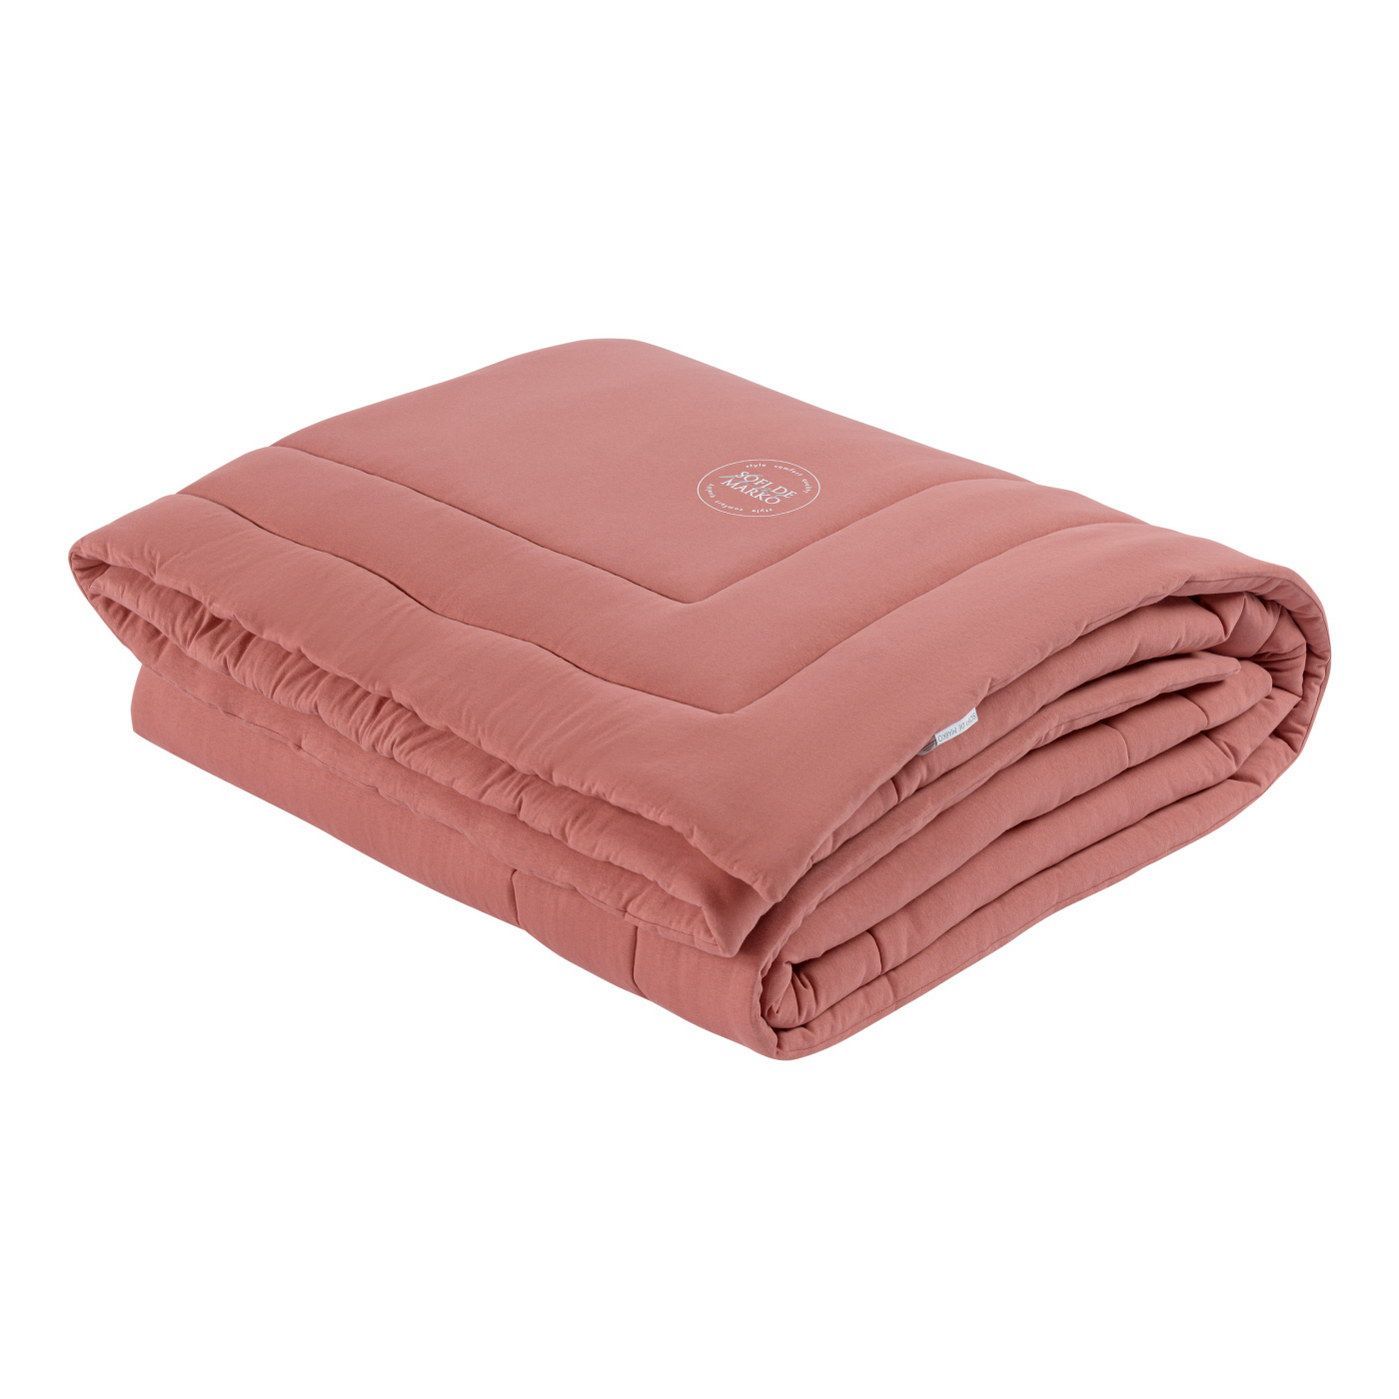 Одеяло-покрывало Роланд цвет: терракотовый (195х215 см), размер 195х215 см